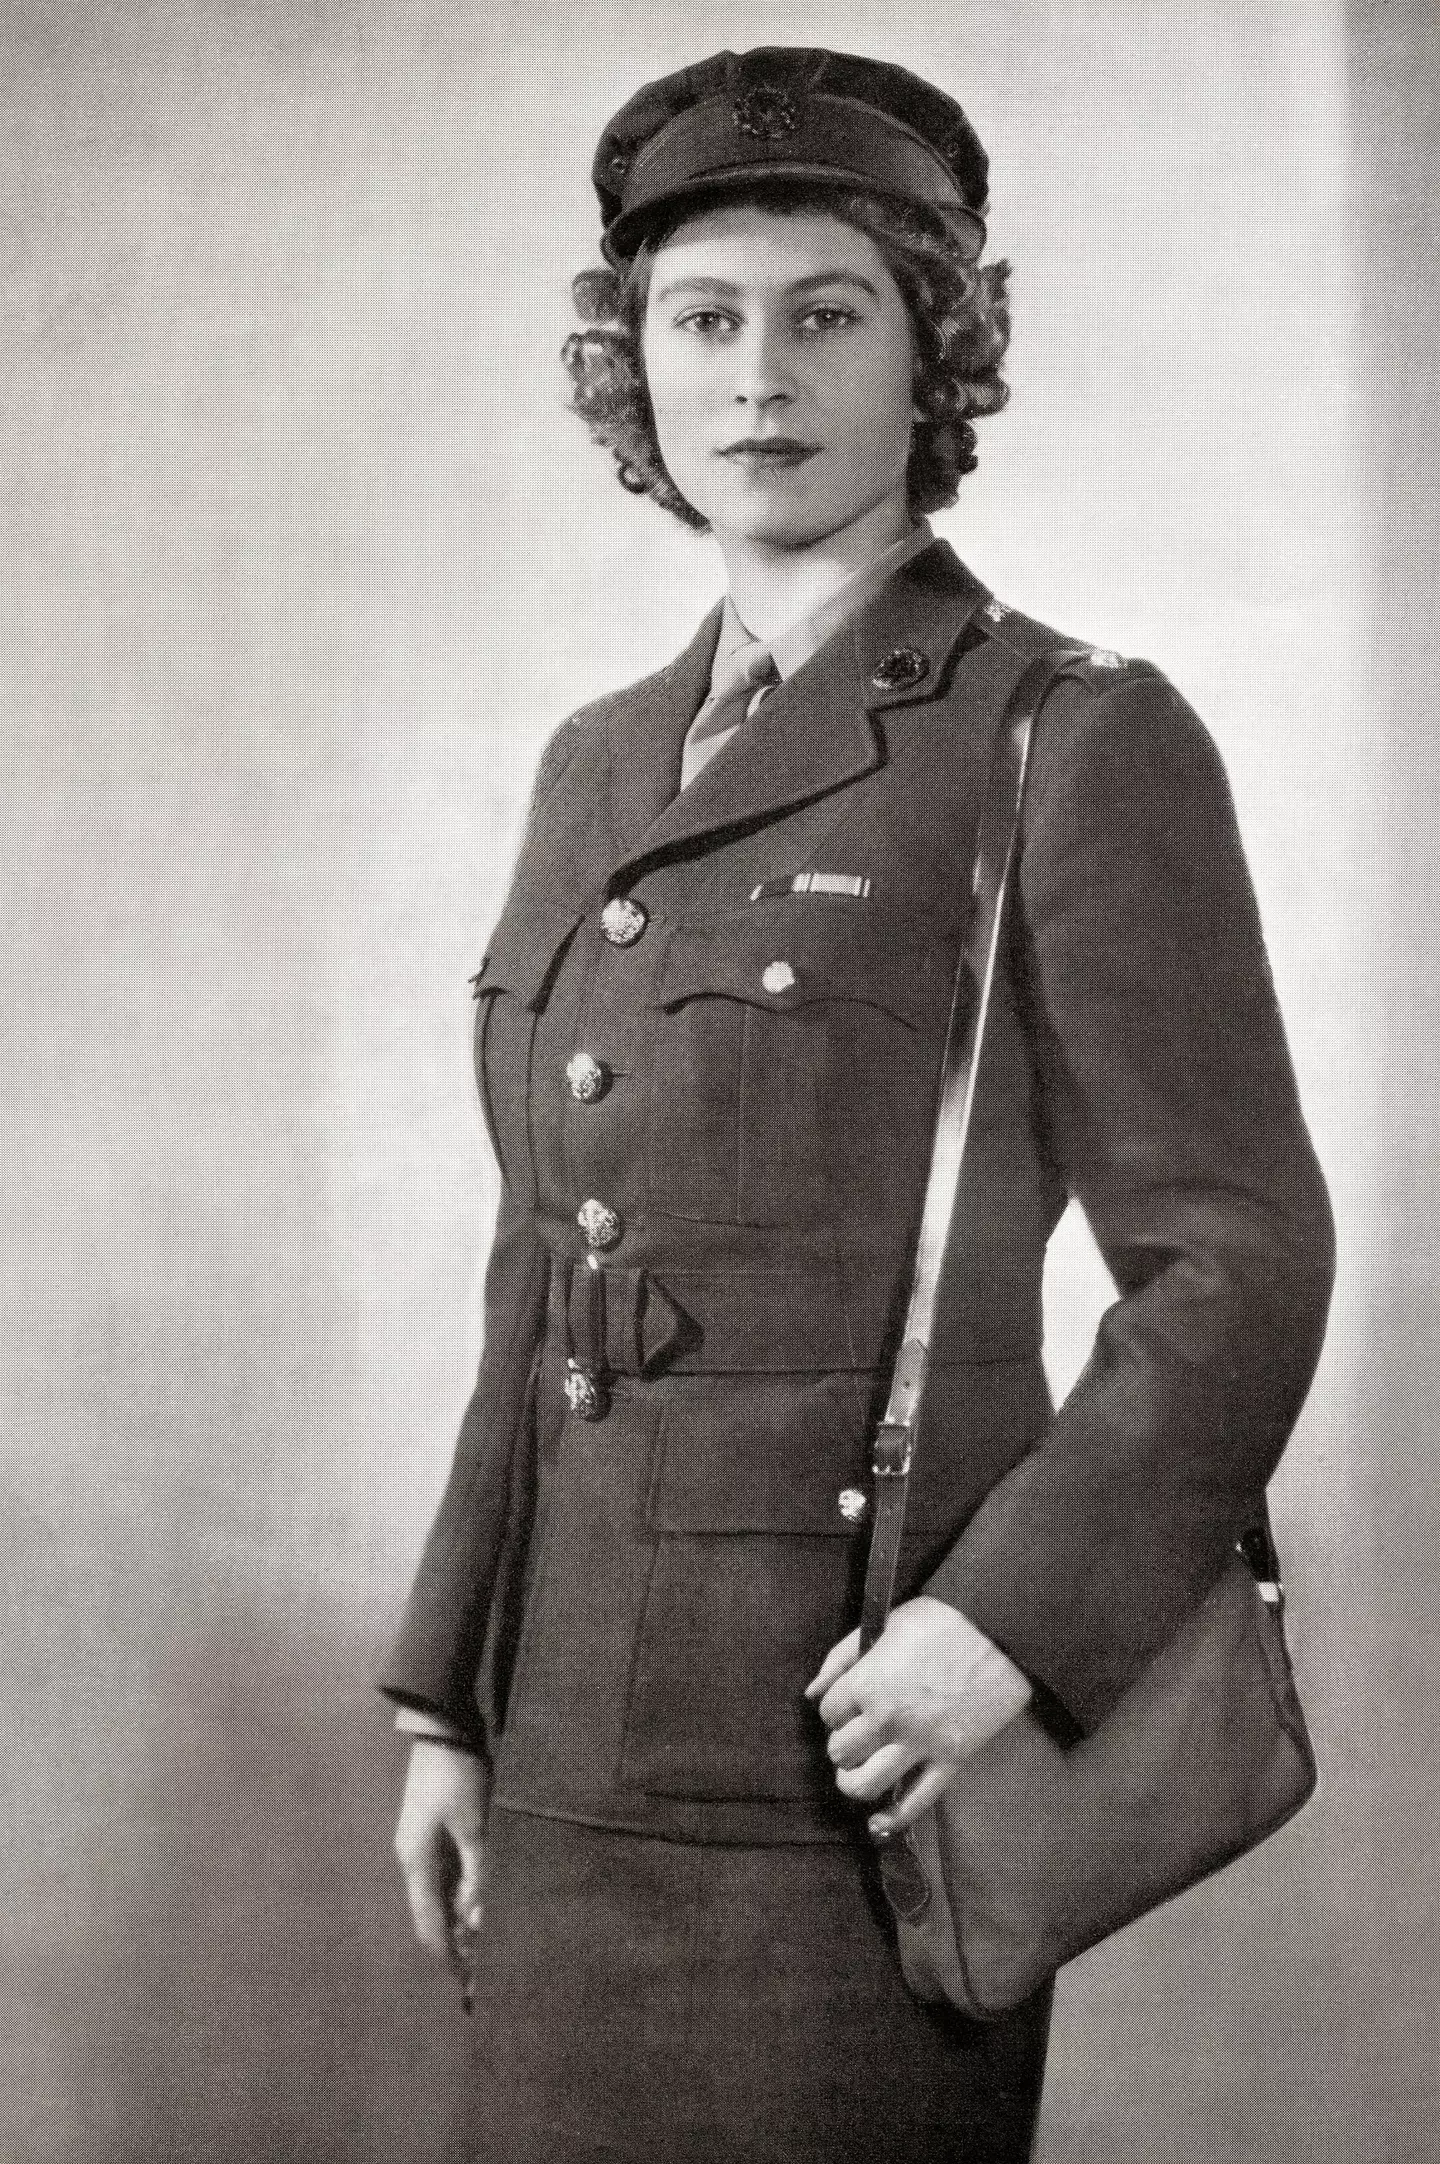 The future Queen Elizabeth II in her Auxiliary Territorial Service uniform.